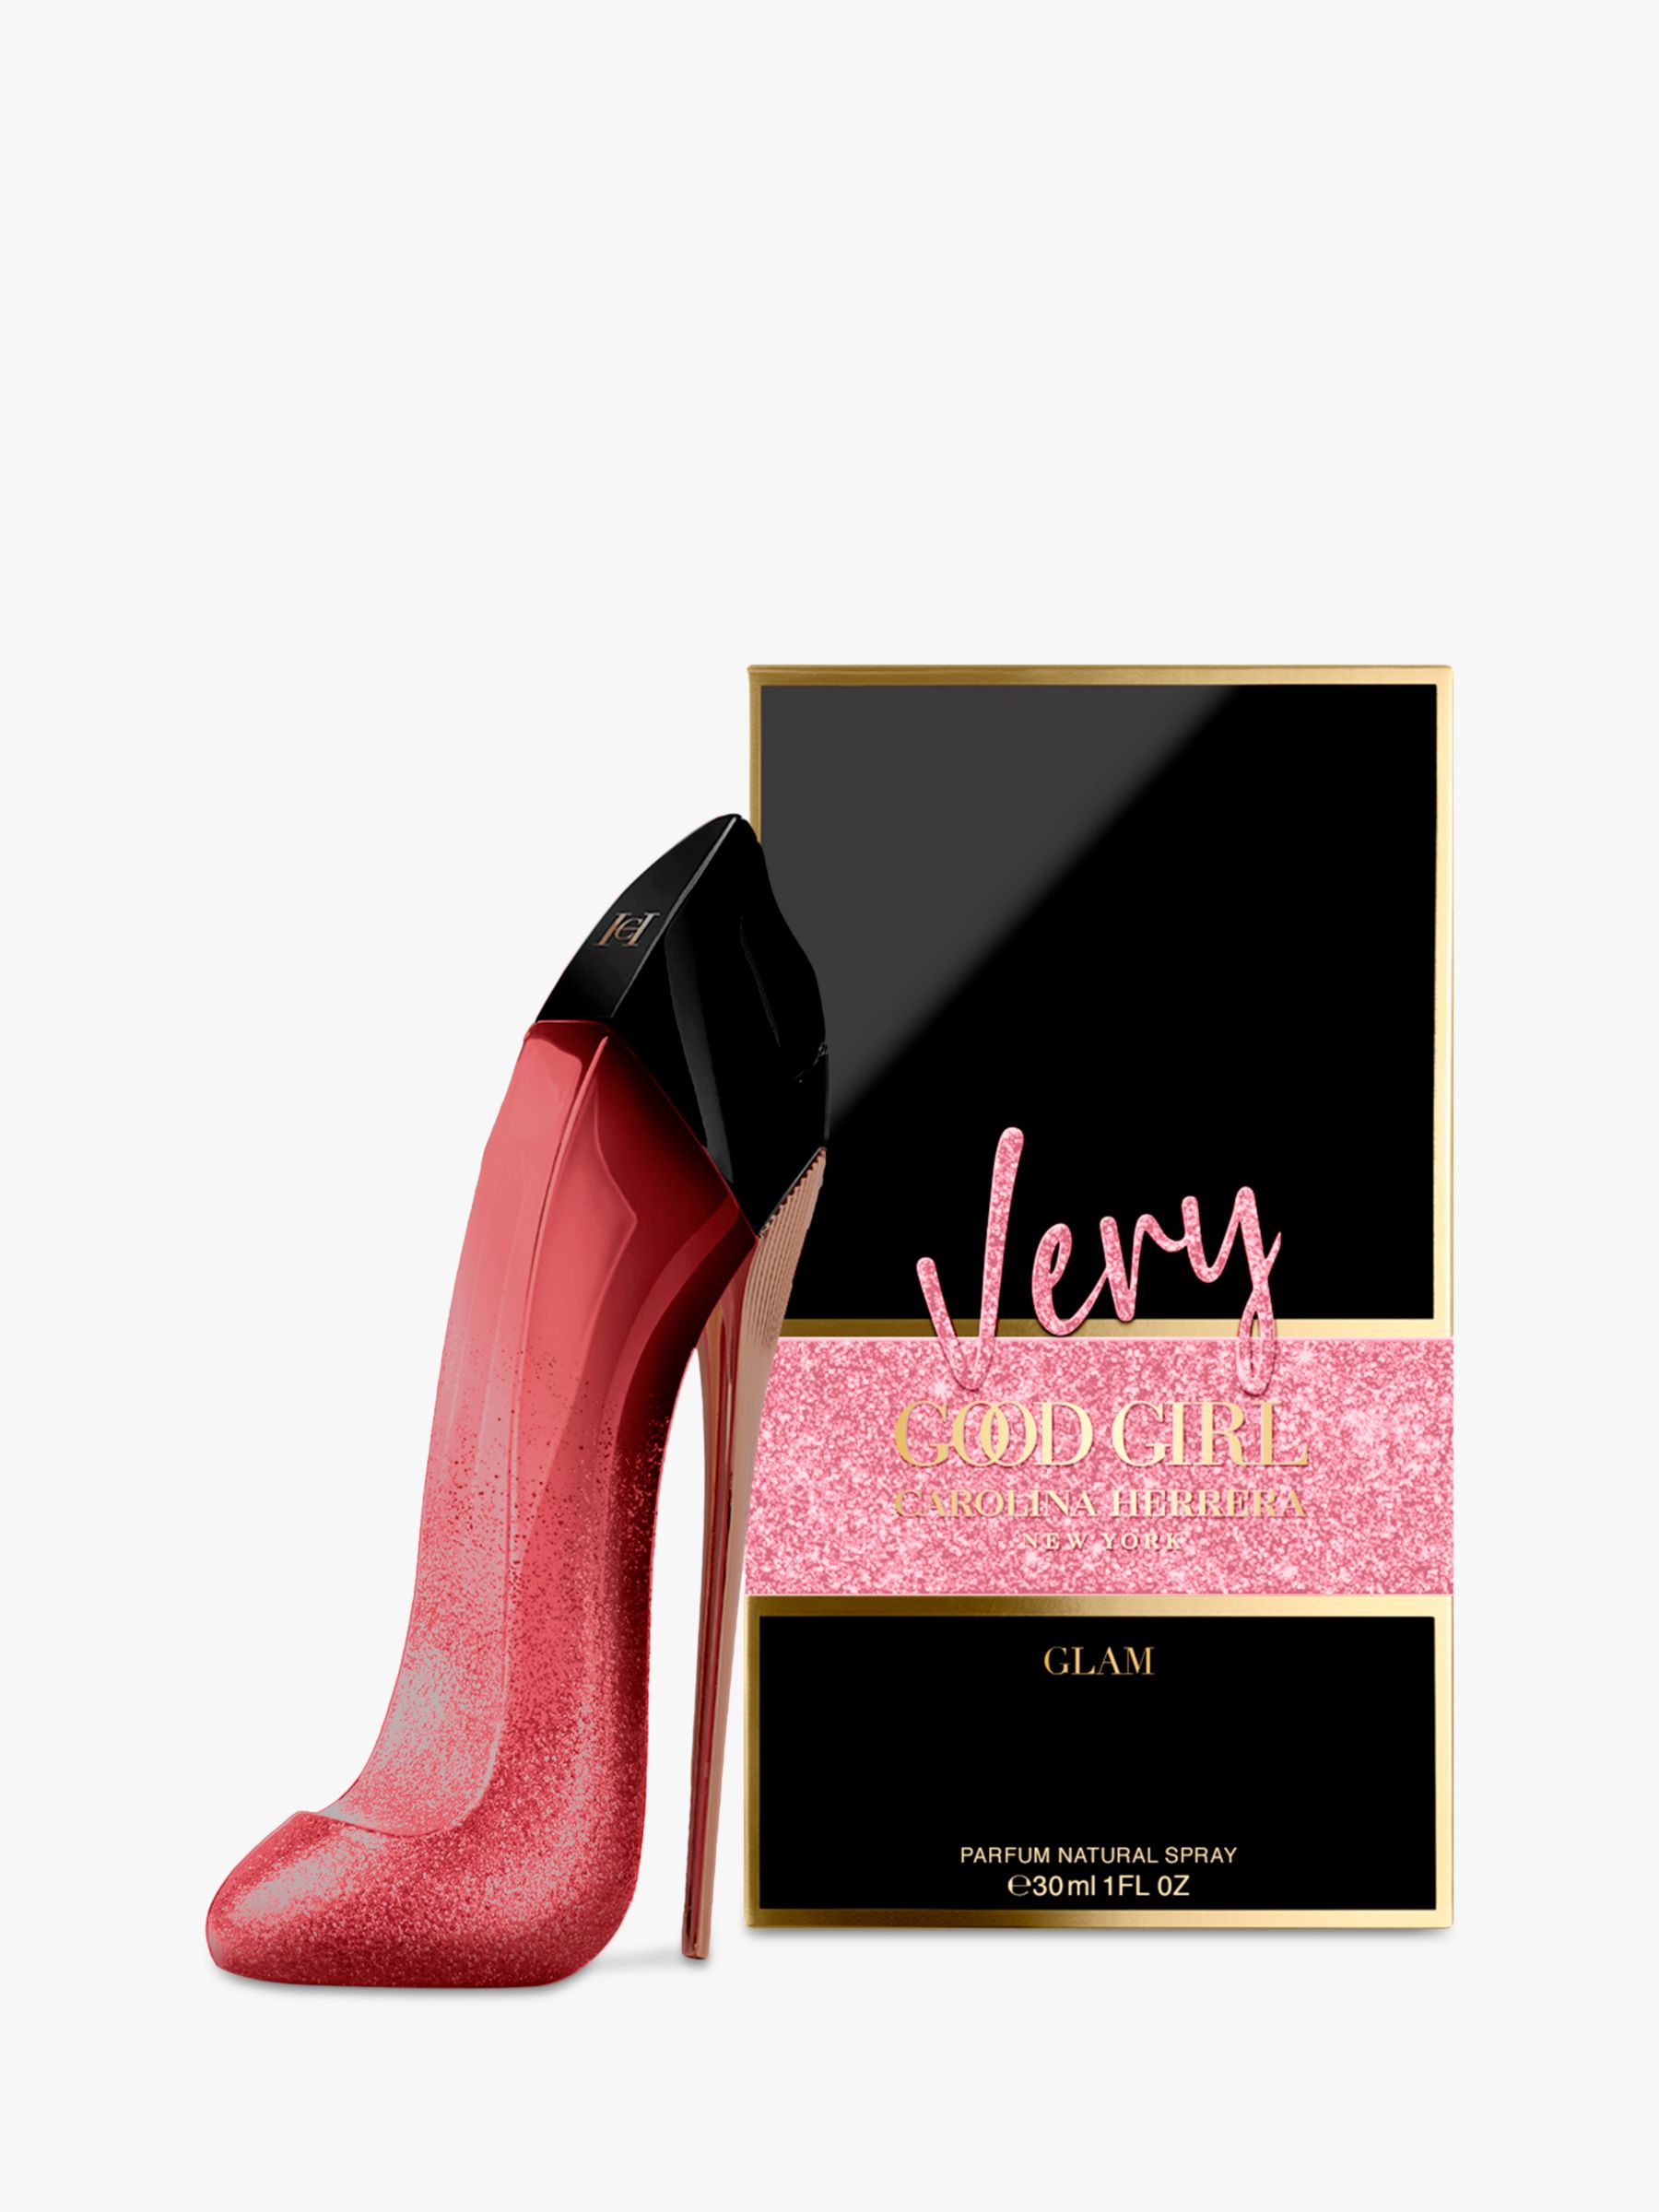 Carolina Herrera Very Good Girl Eau de Parfum Gift Set